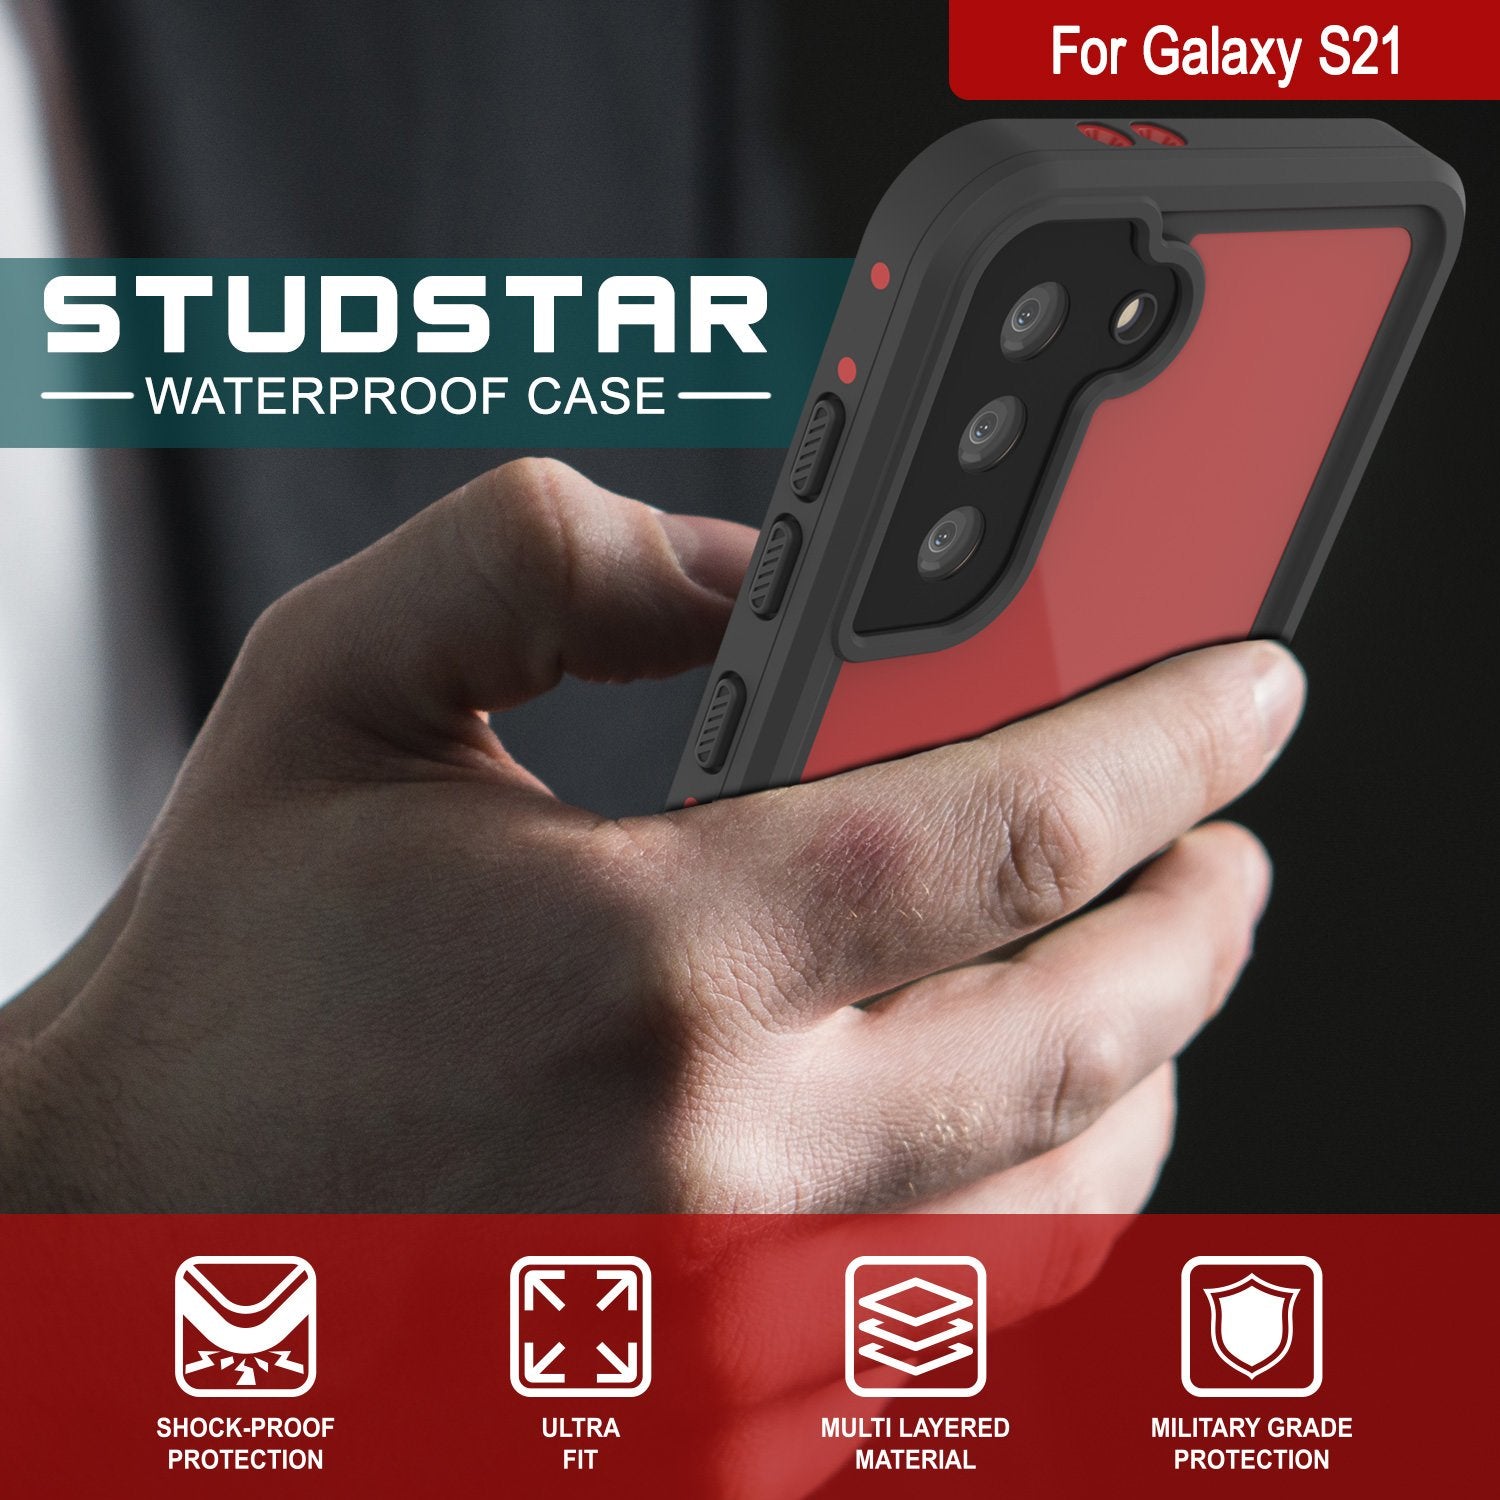 Galaxy S21 Waterproof Case PunkCase StudStar Red Thin 6.6ft Underwater IP68 Shock/Snow Proof